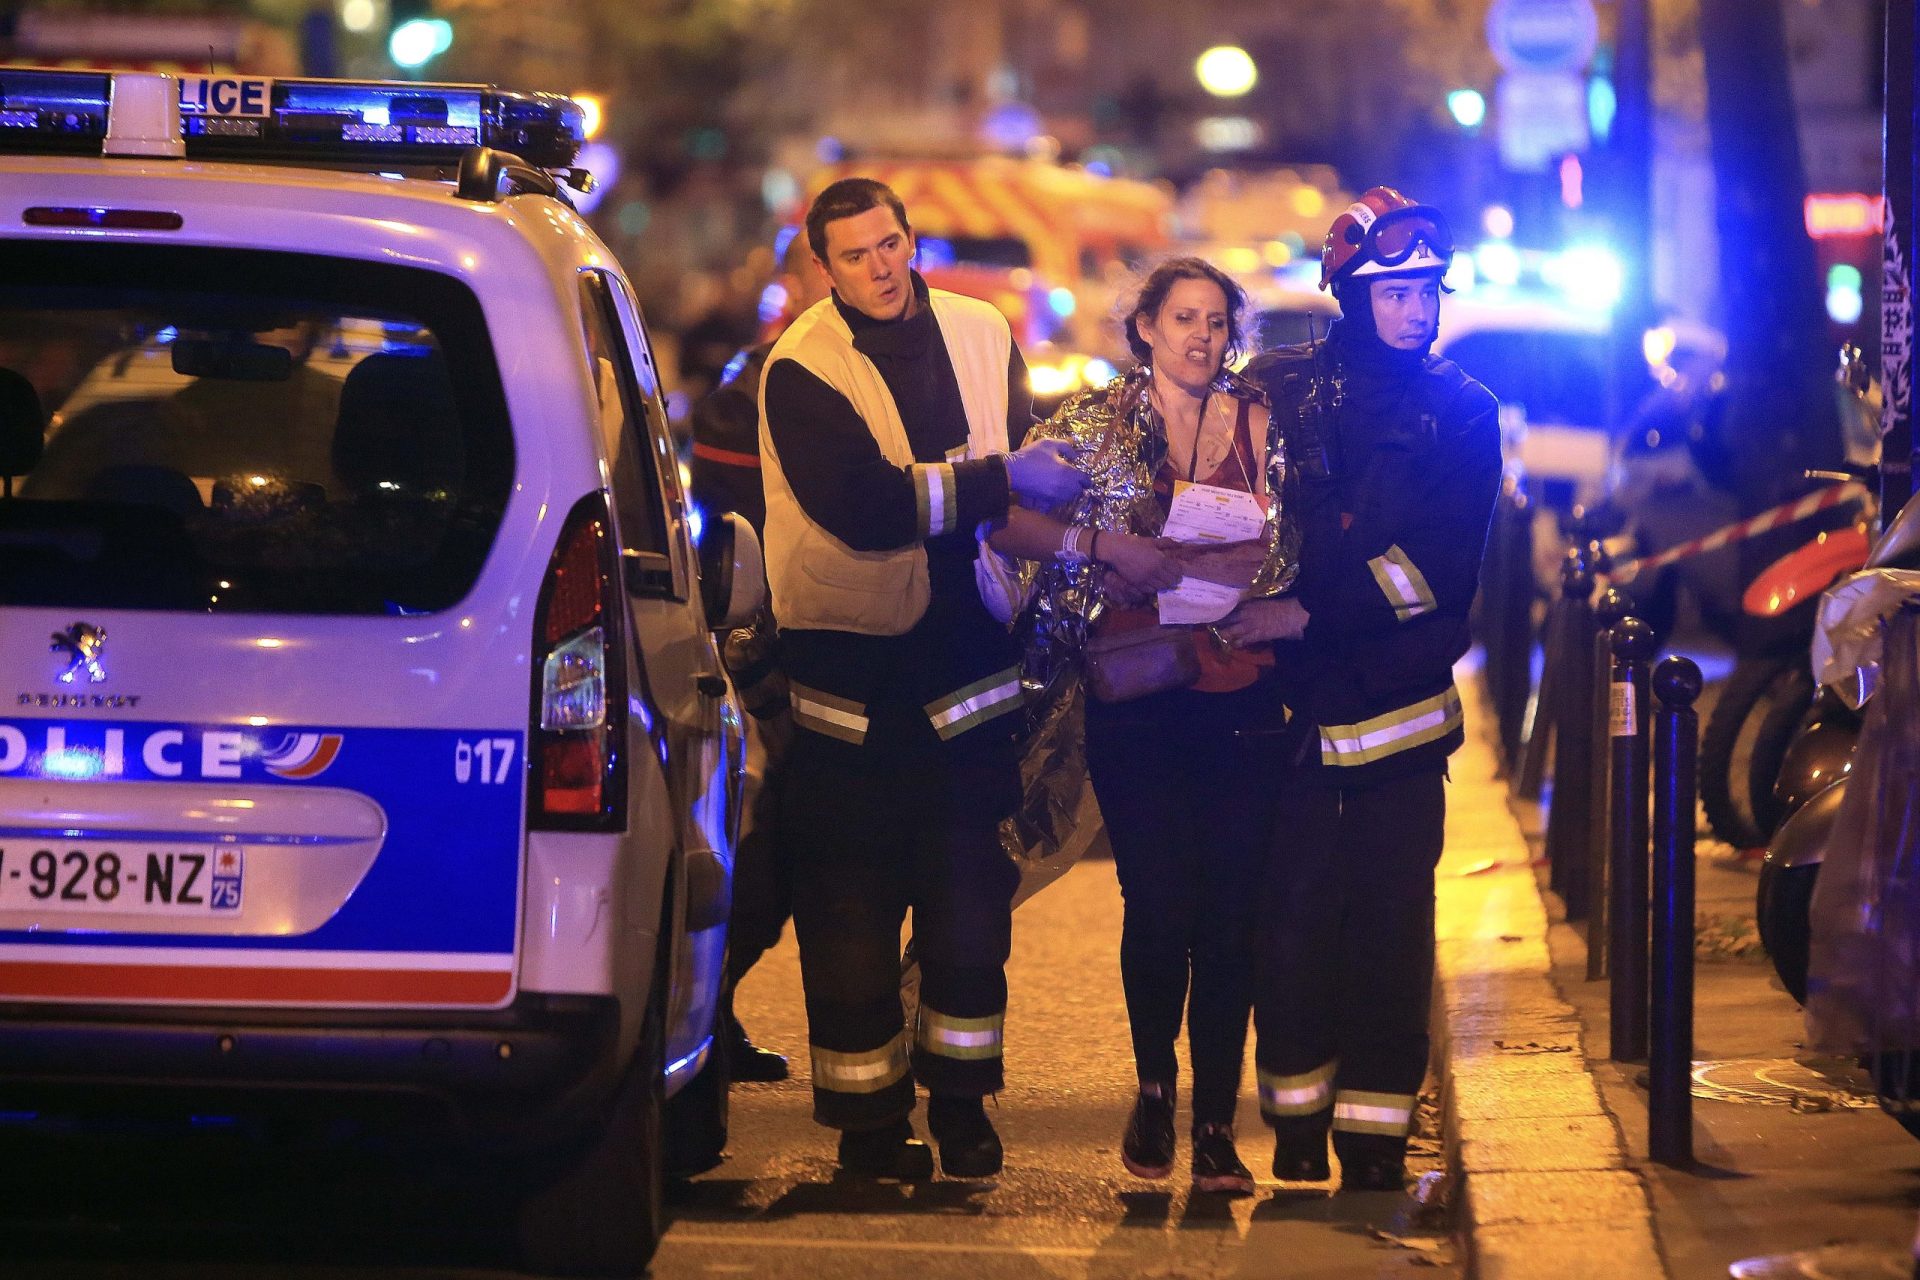 Ataque em Paris: NATO condena ataques e garante estar unida contra terrorismo